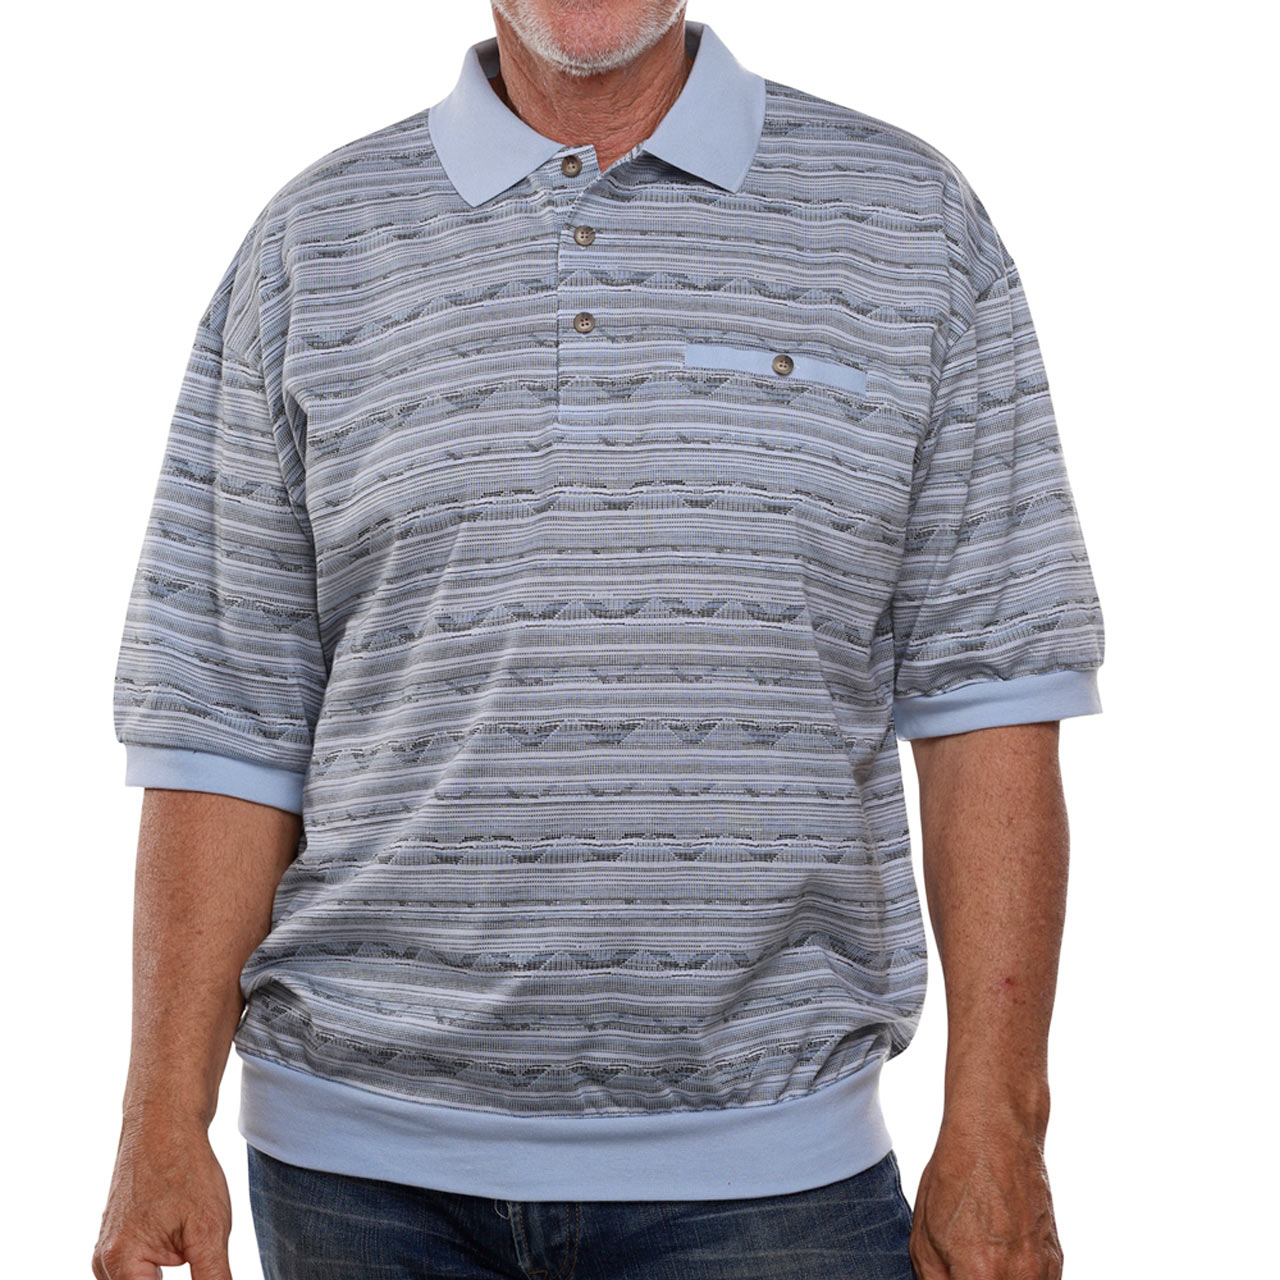 Men's Classics By Palmland Short Sleeve Polo Knit Allover Design Banded Bottom Shirt #6191-328 Light Blue